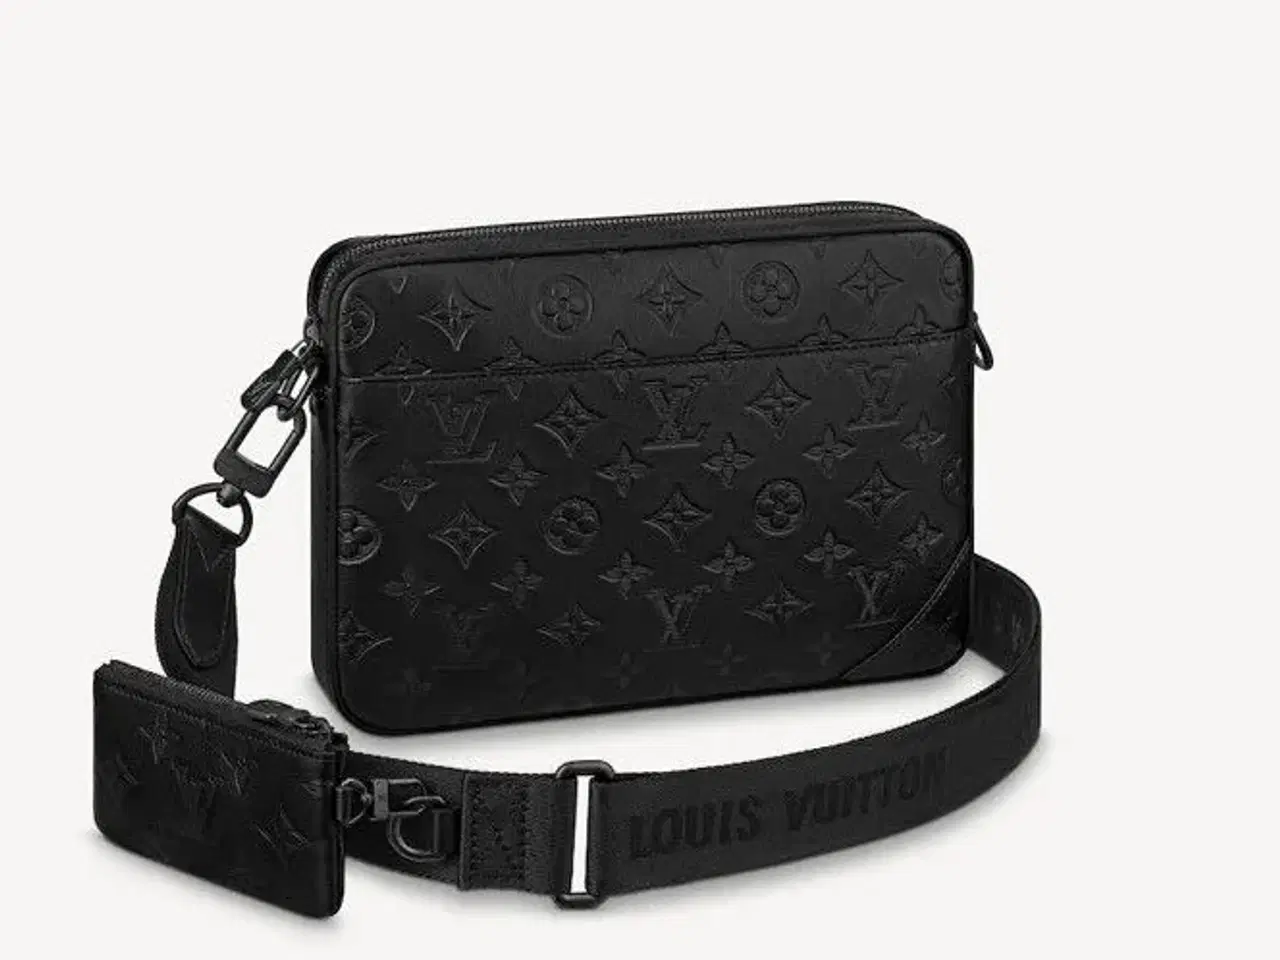 Billede 3 - Louis Vuitton taske